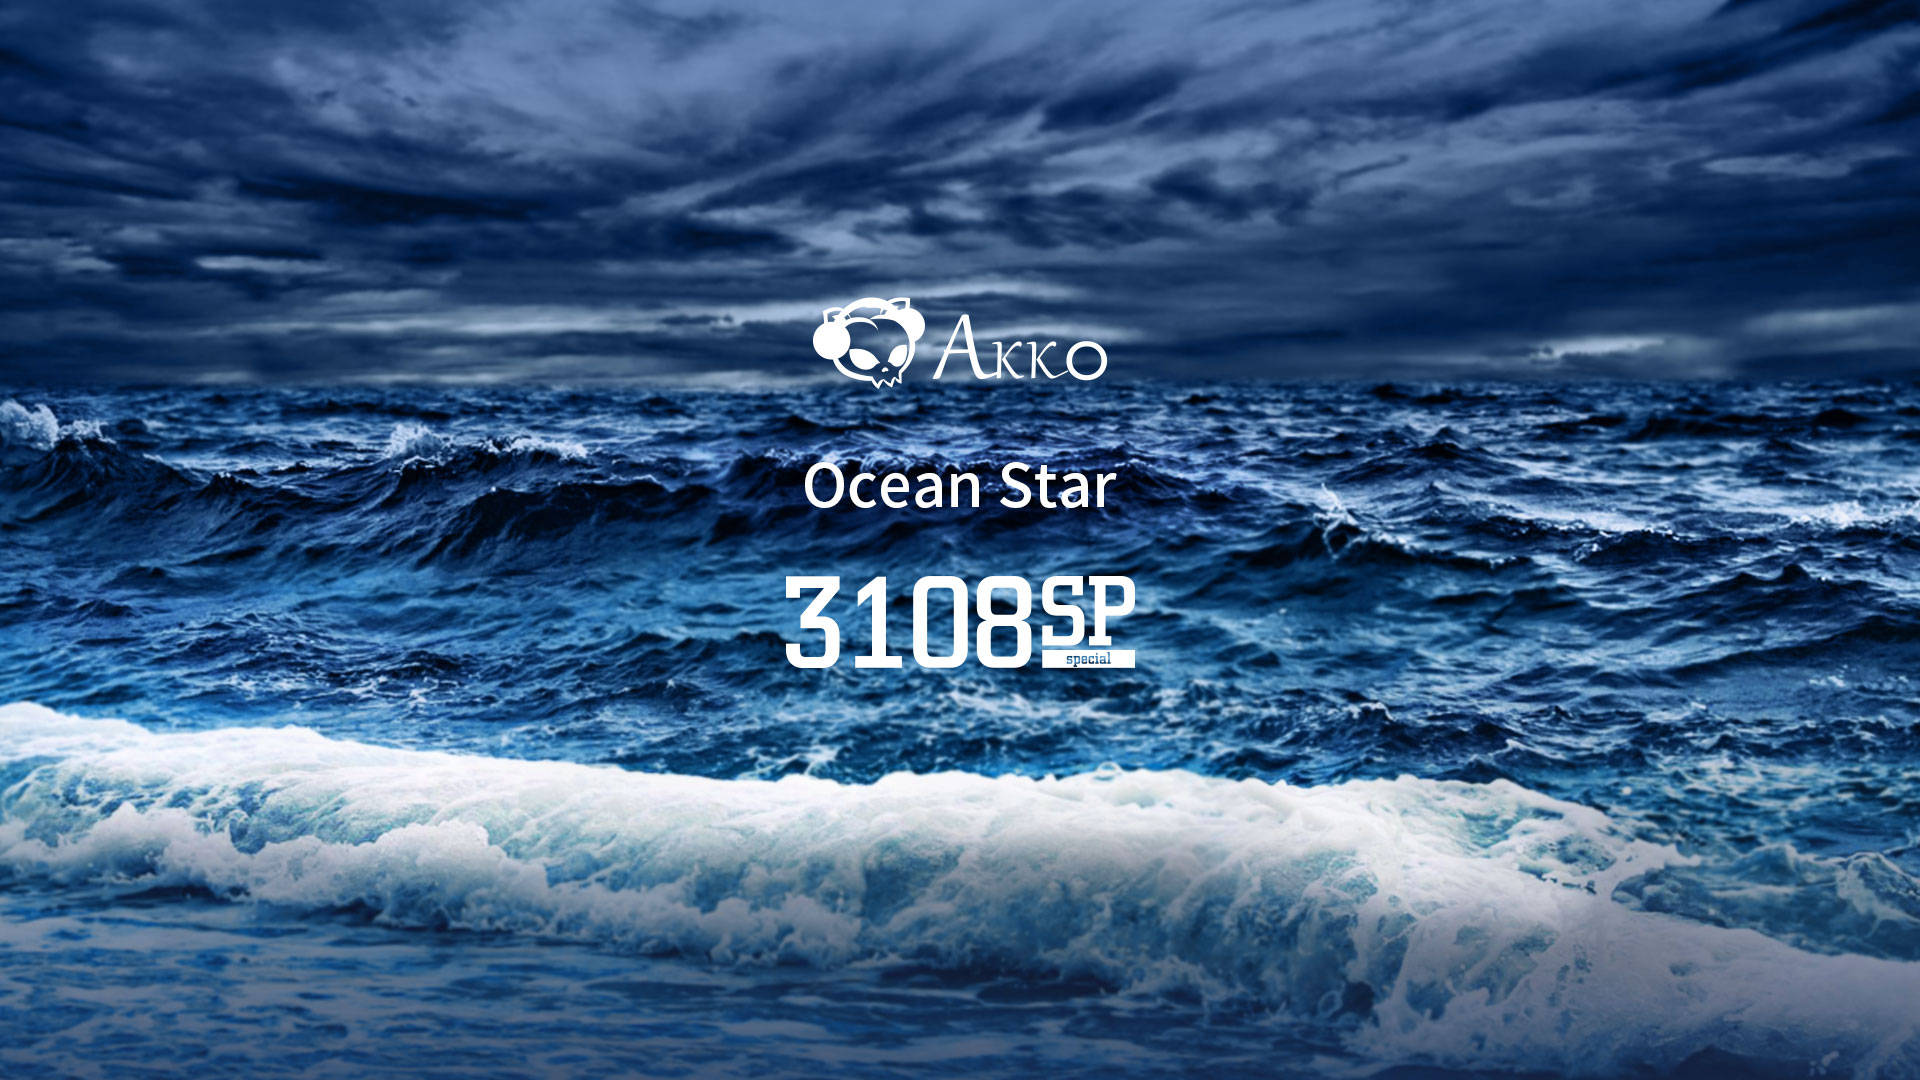 Star Ocean. Akko 3087ds Ocean Star. СП оушен. Океан браузер. Океан сп новокузнецк совместные